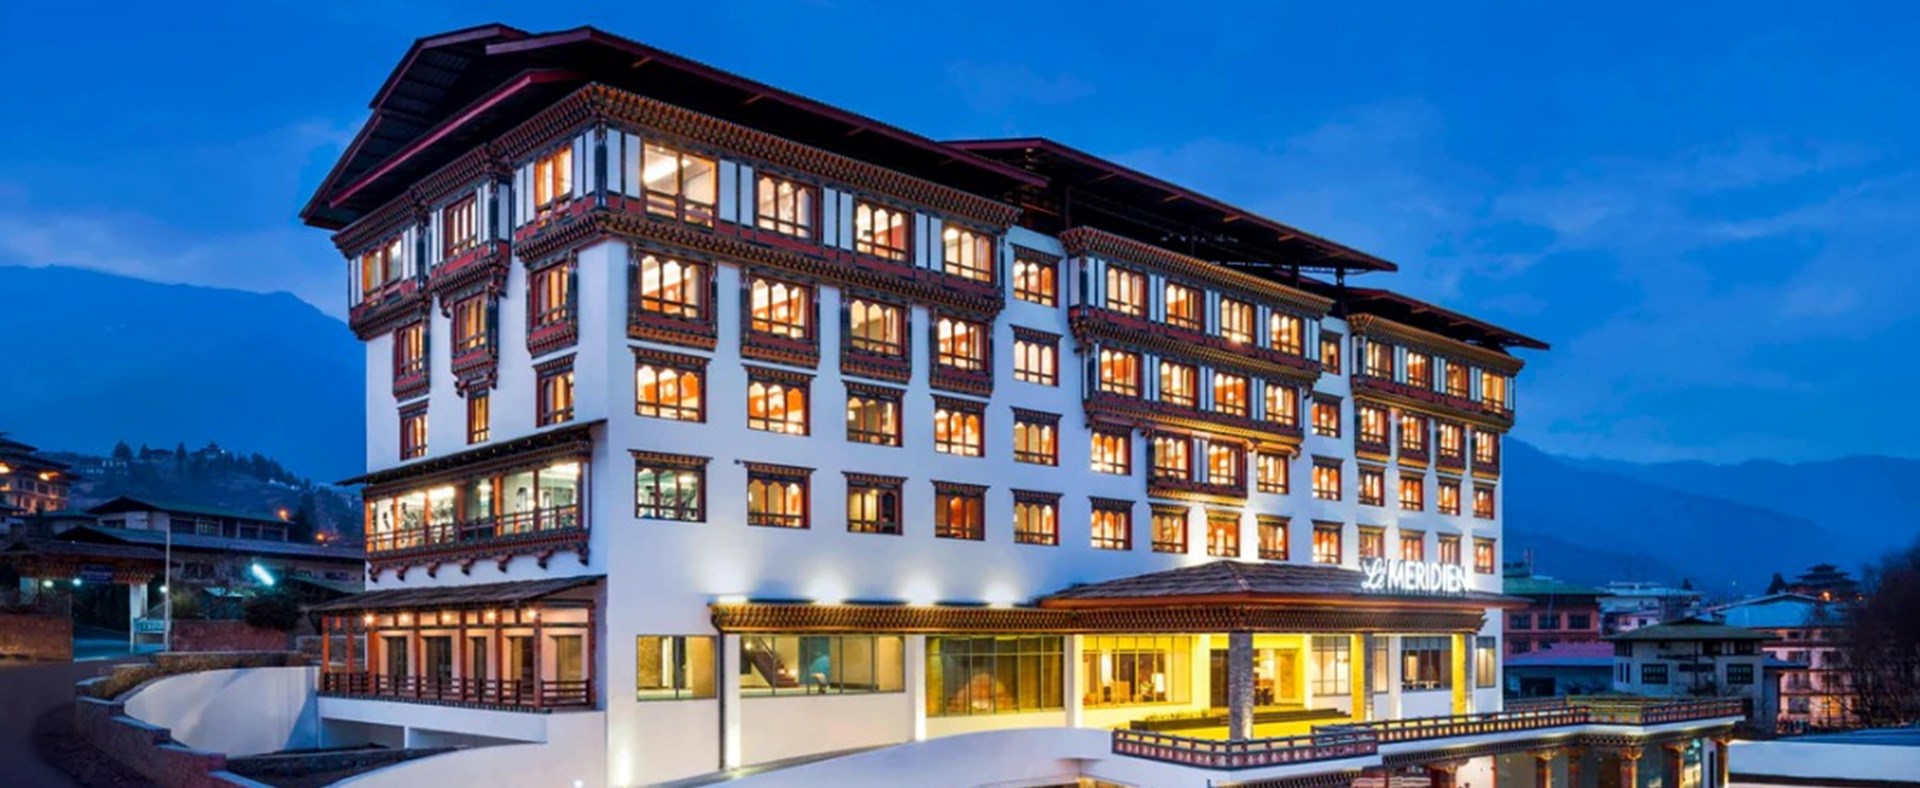 Le Méridien Thimphu - Bhutan - 5 star luxurious hotel